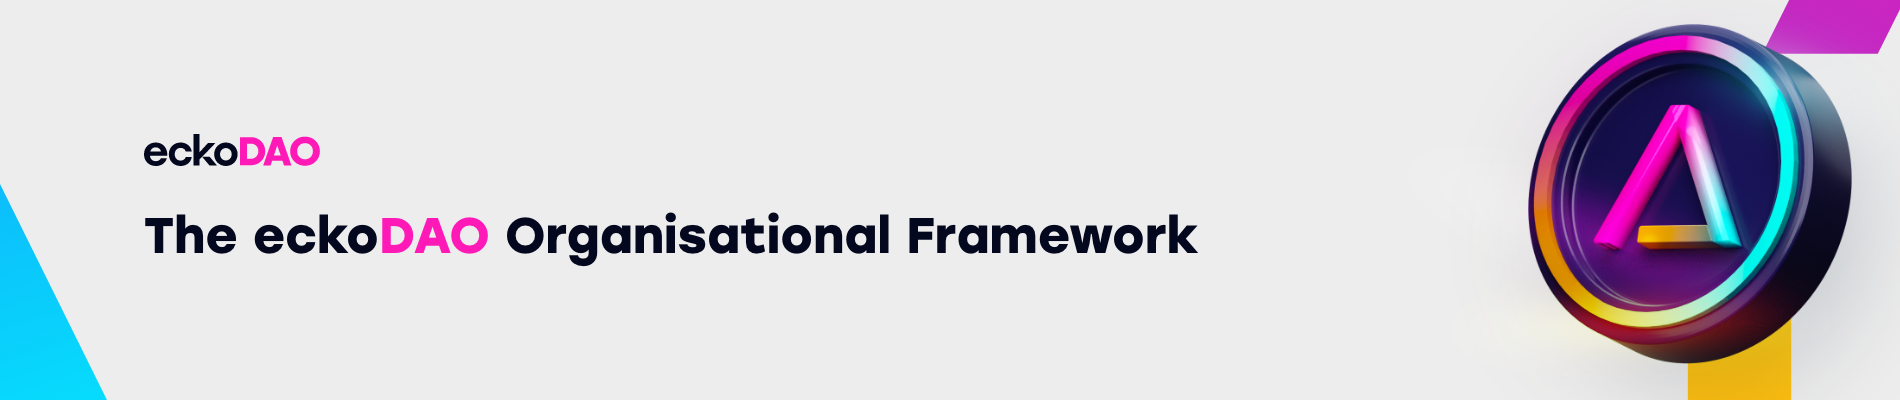 eckoDAO: Organisational Framework